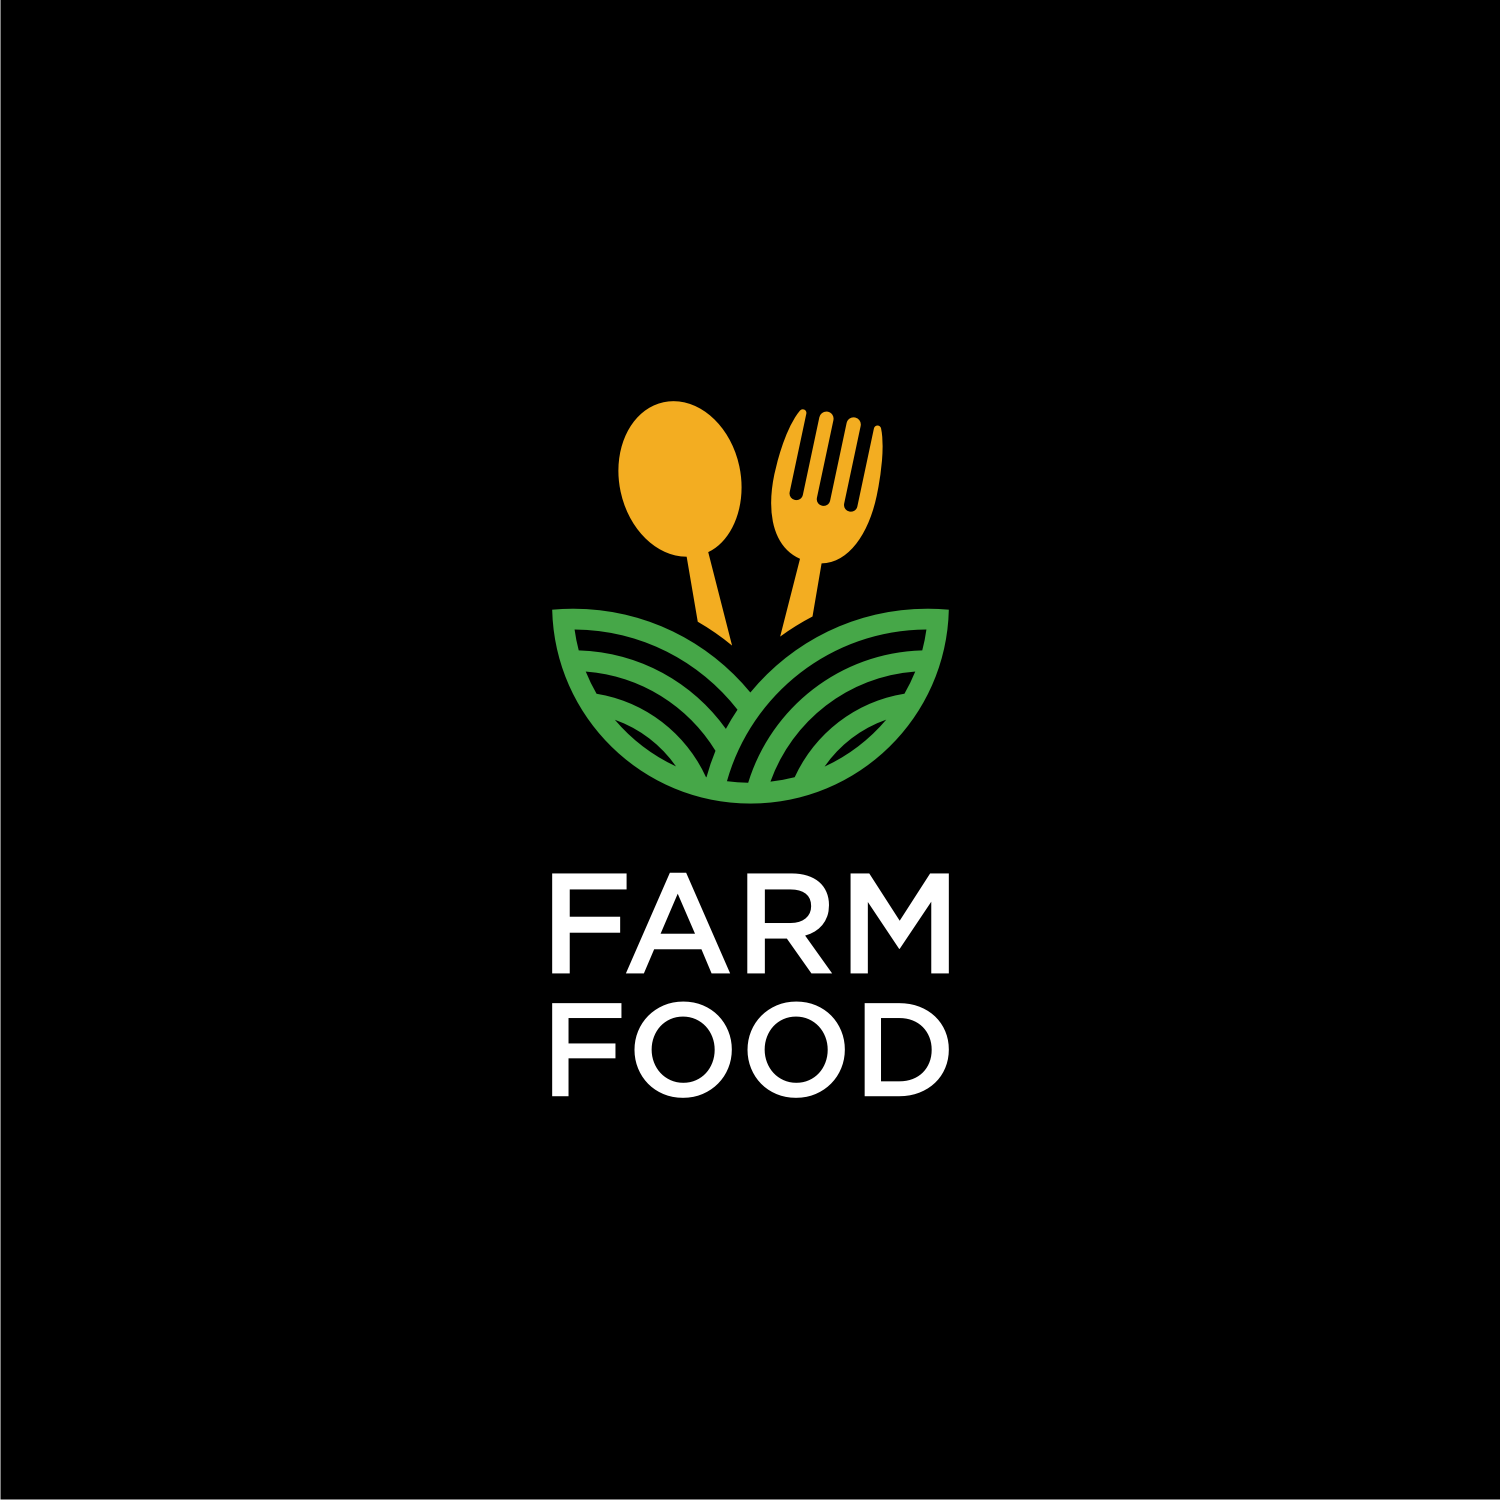 Farm Food Logo Design Vector cover image.